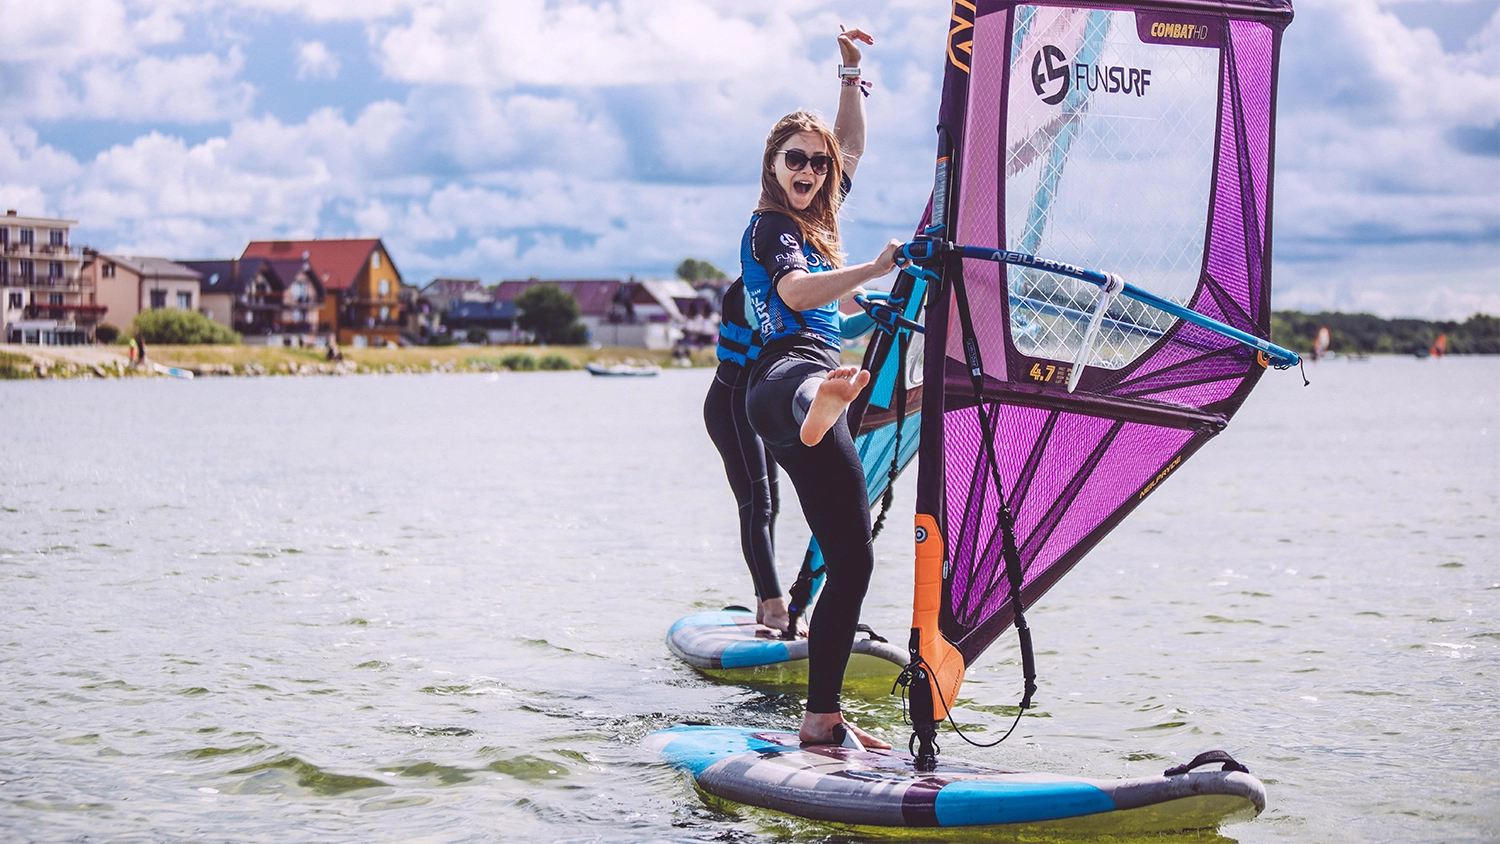 ryfka_weronika_instruktorka_windsurfingu_funsurf_1